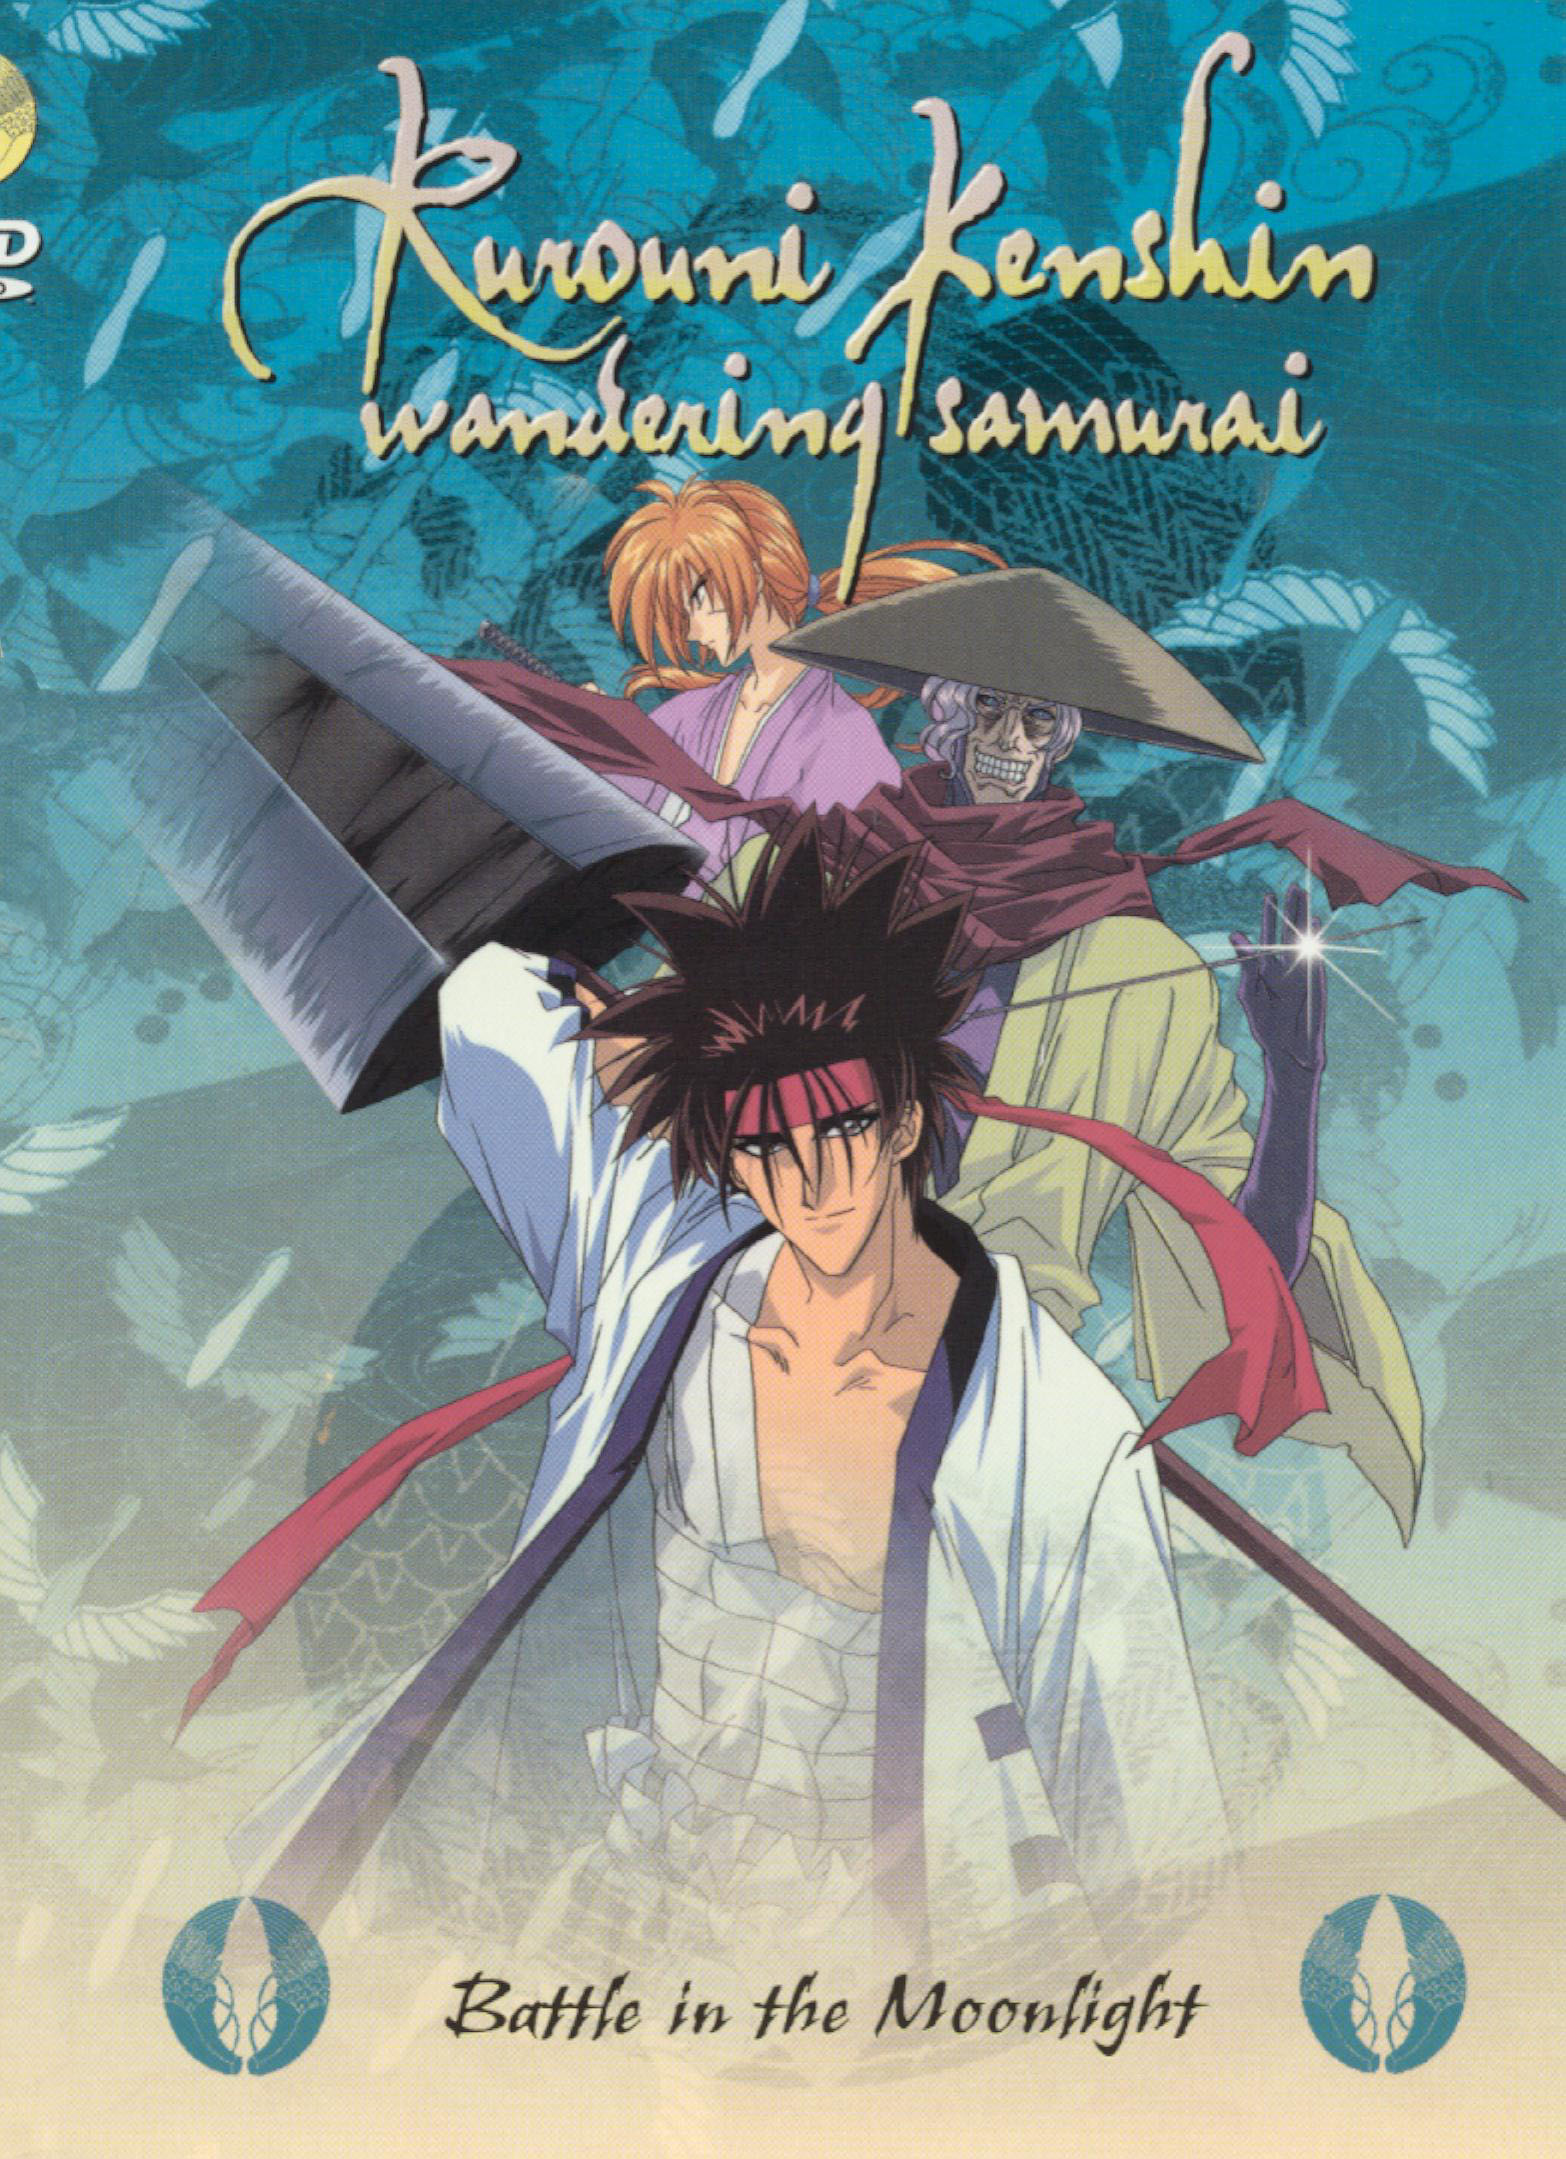 Rurouni Kenshin and the Philippines' Love Affair with the Wandering Samurai